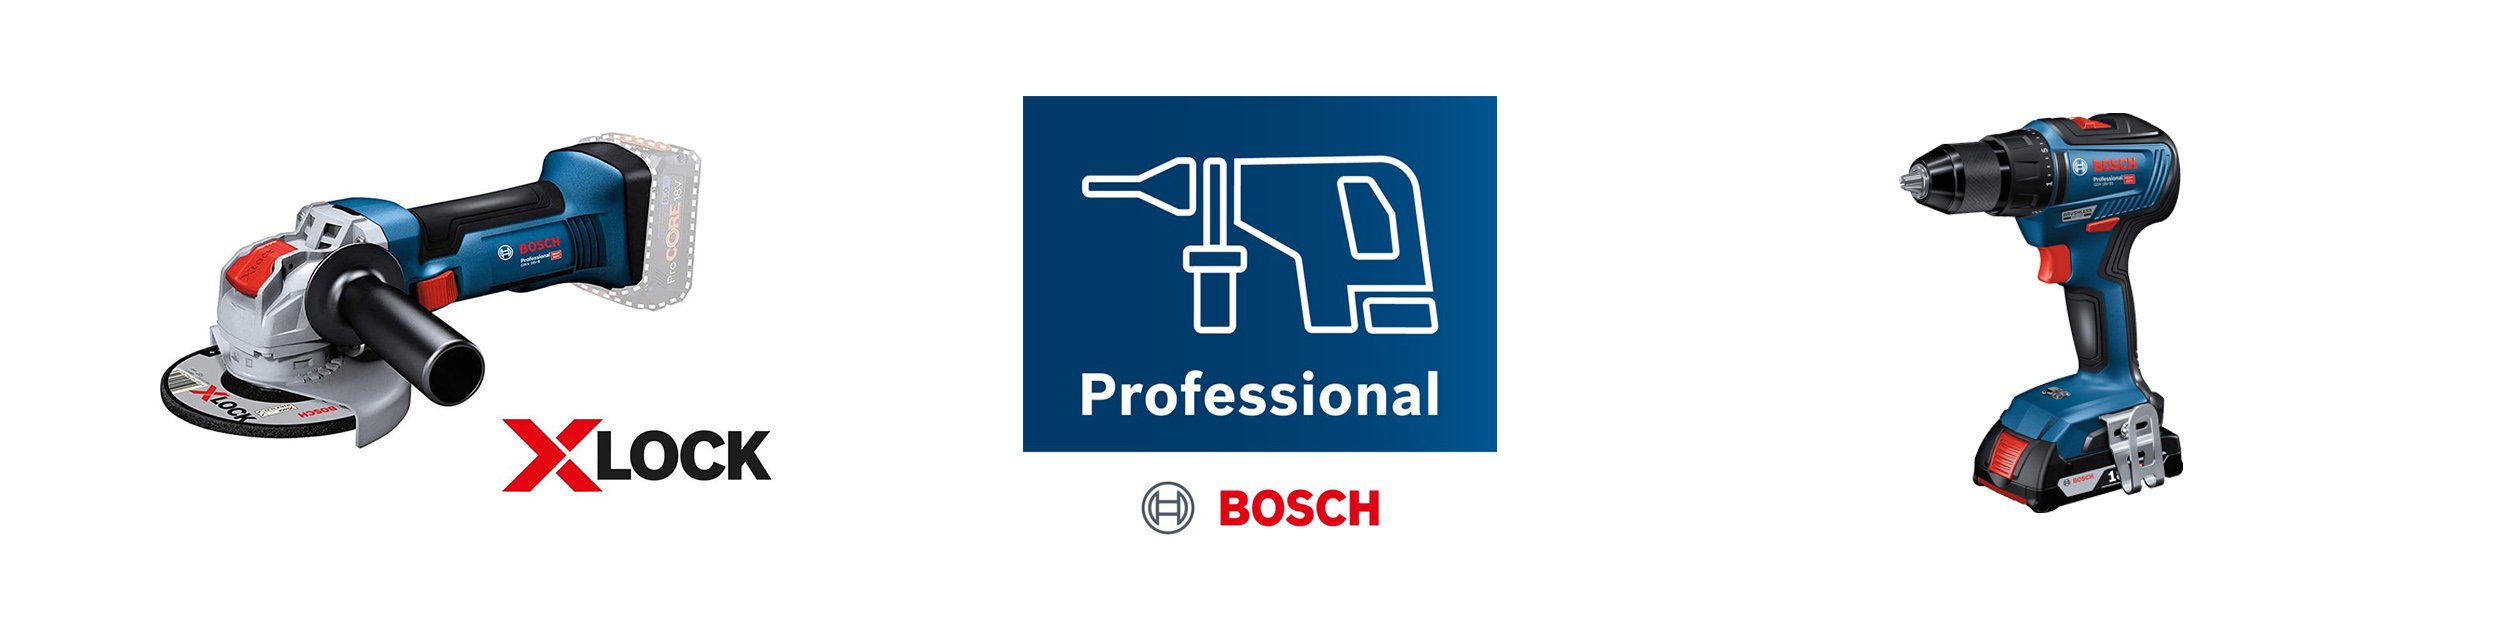 Outils électroportatifs a Câble - Bosch